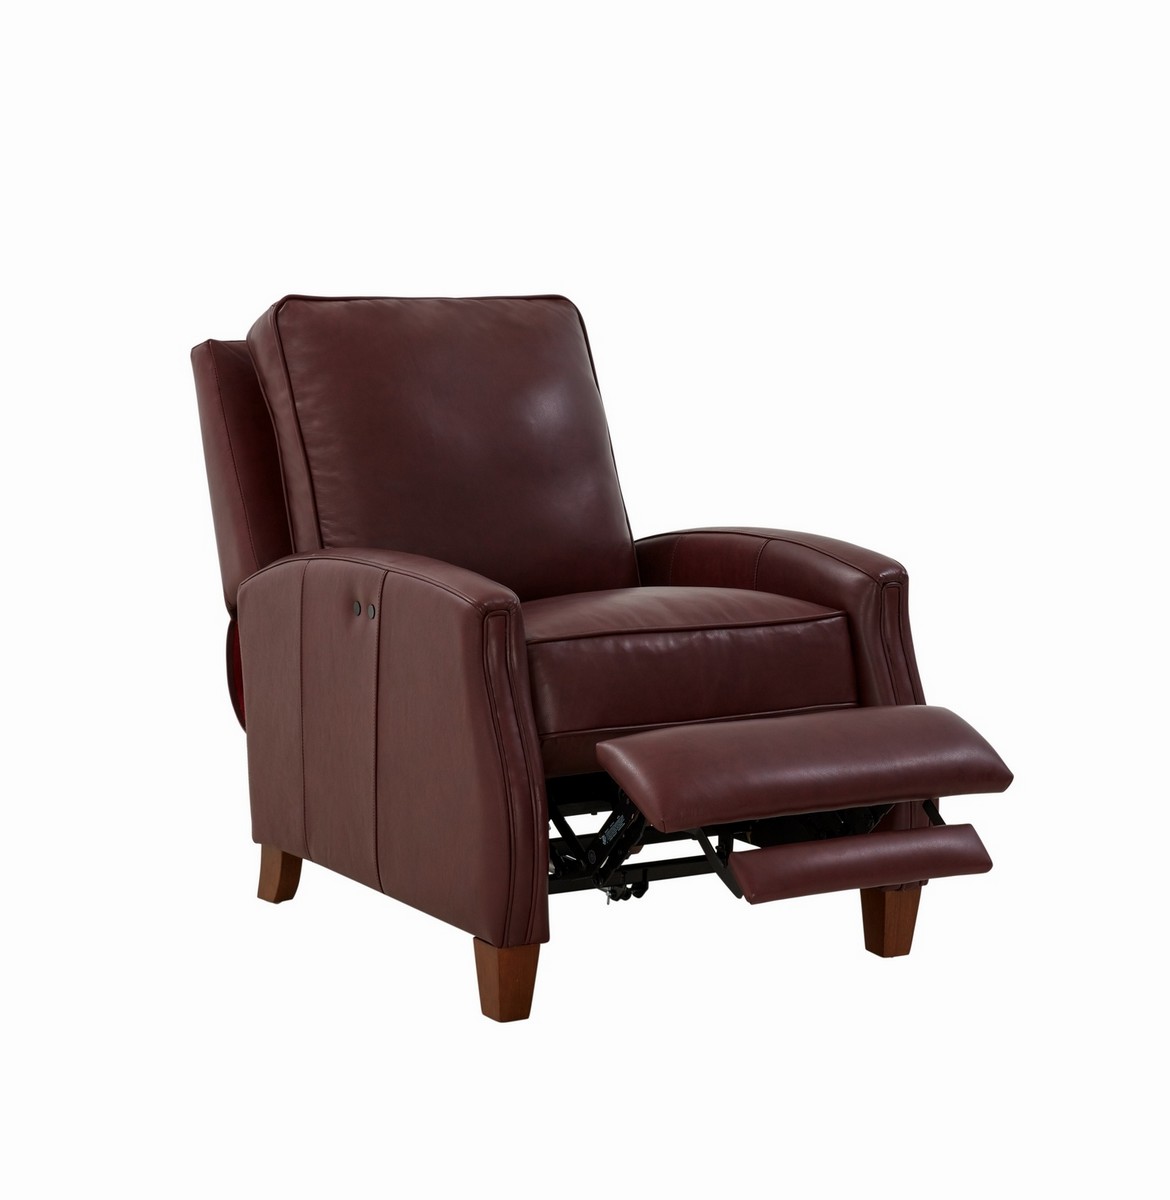 Barcalounger Penrose Power Recliner Chair - Shoreham Wine/All Leather